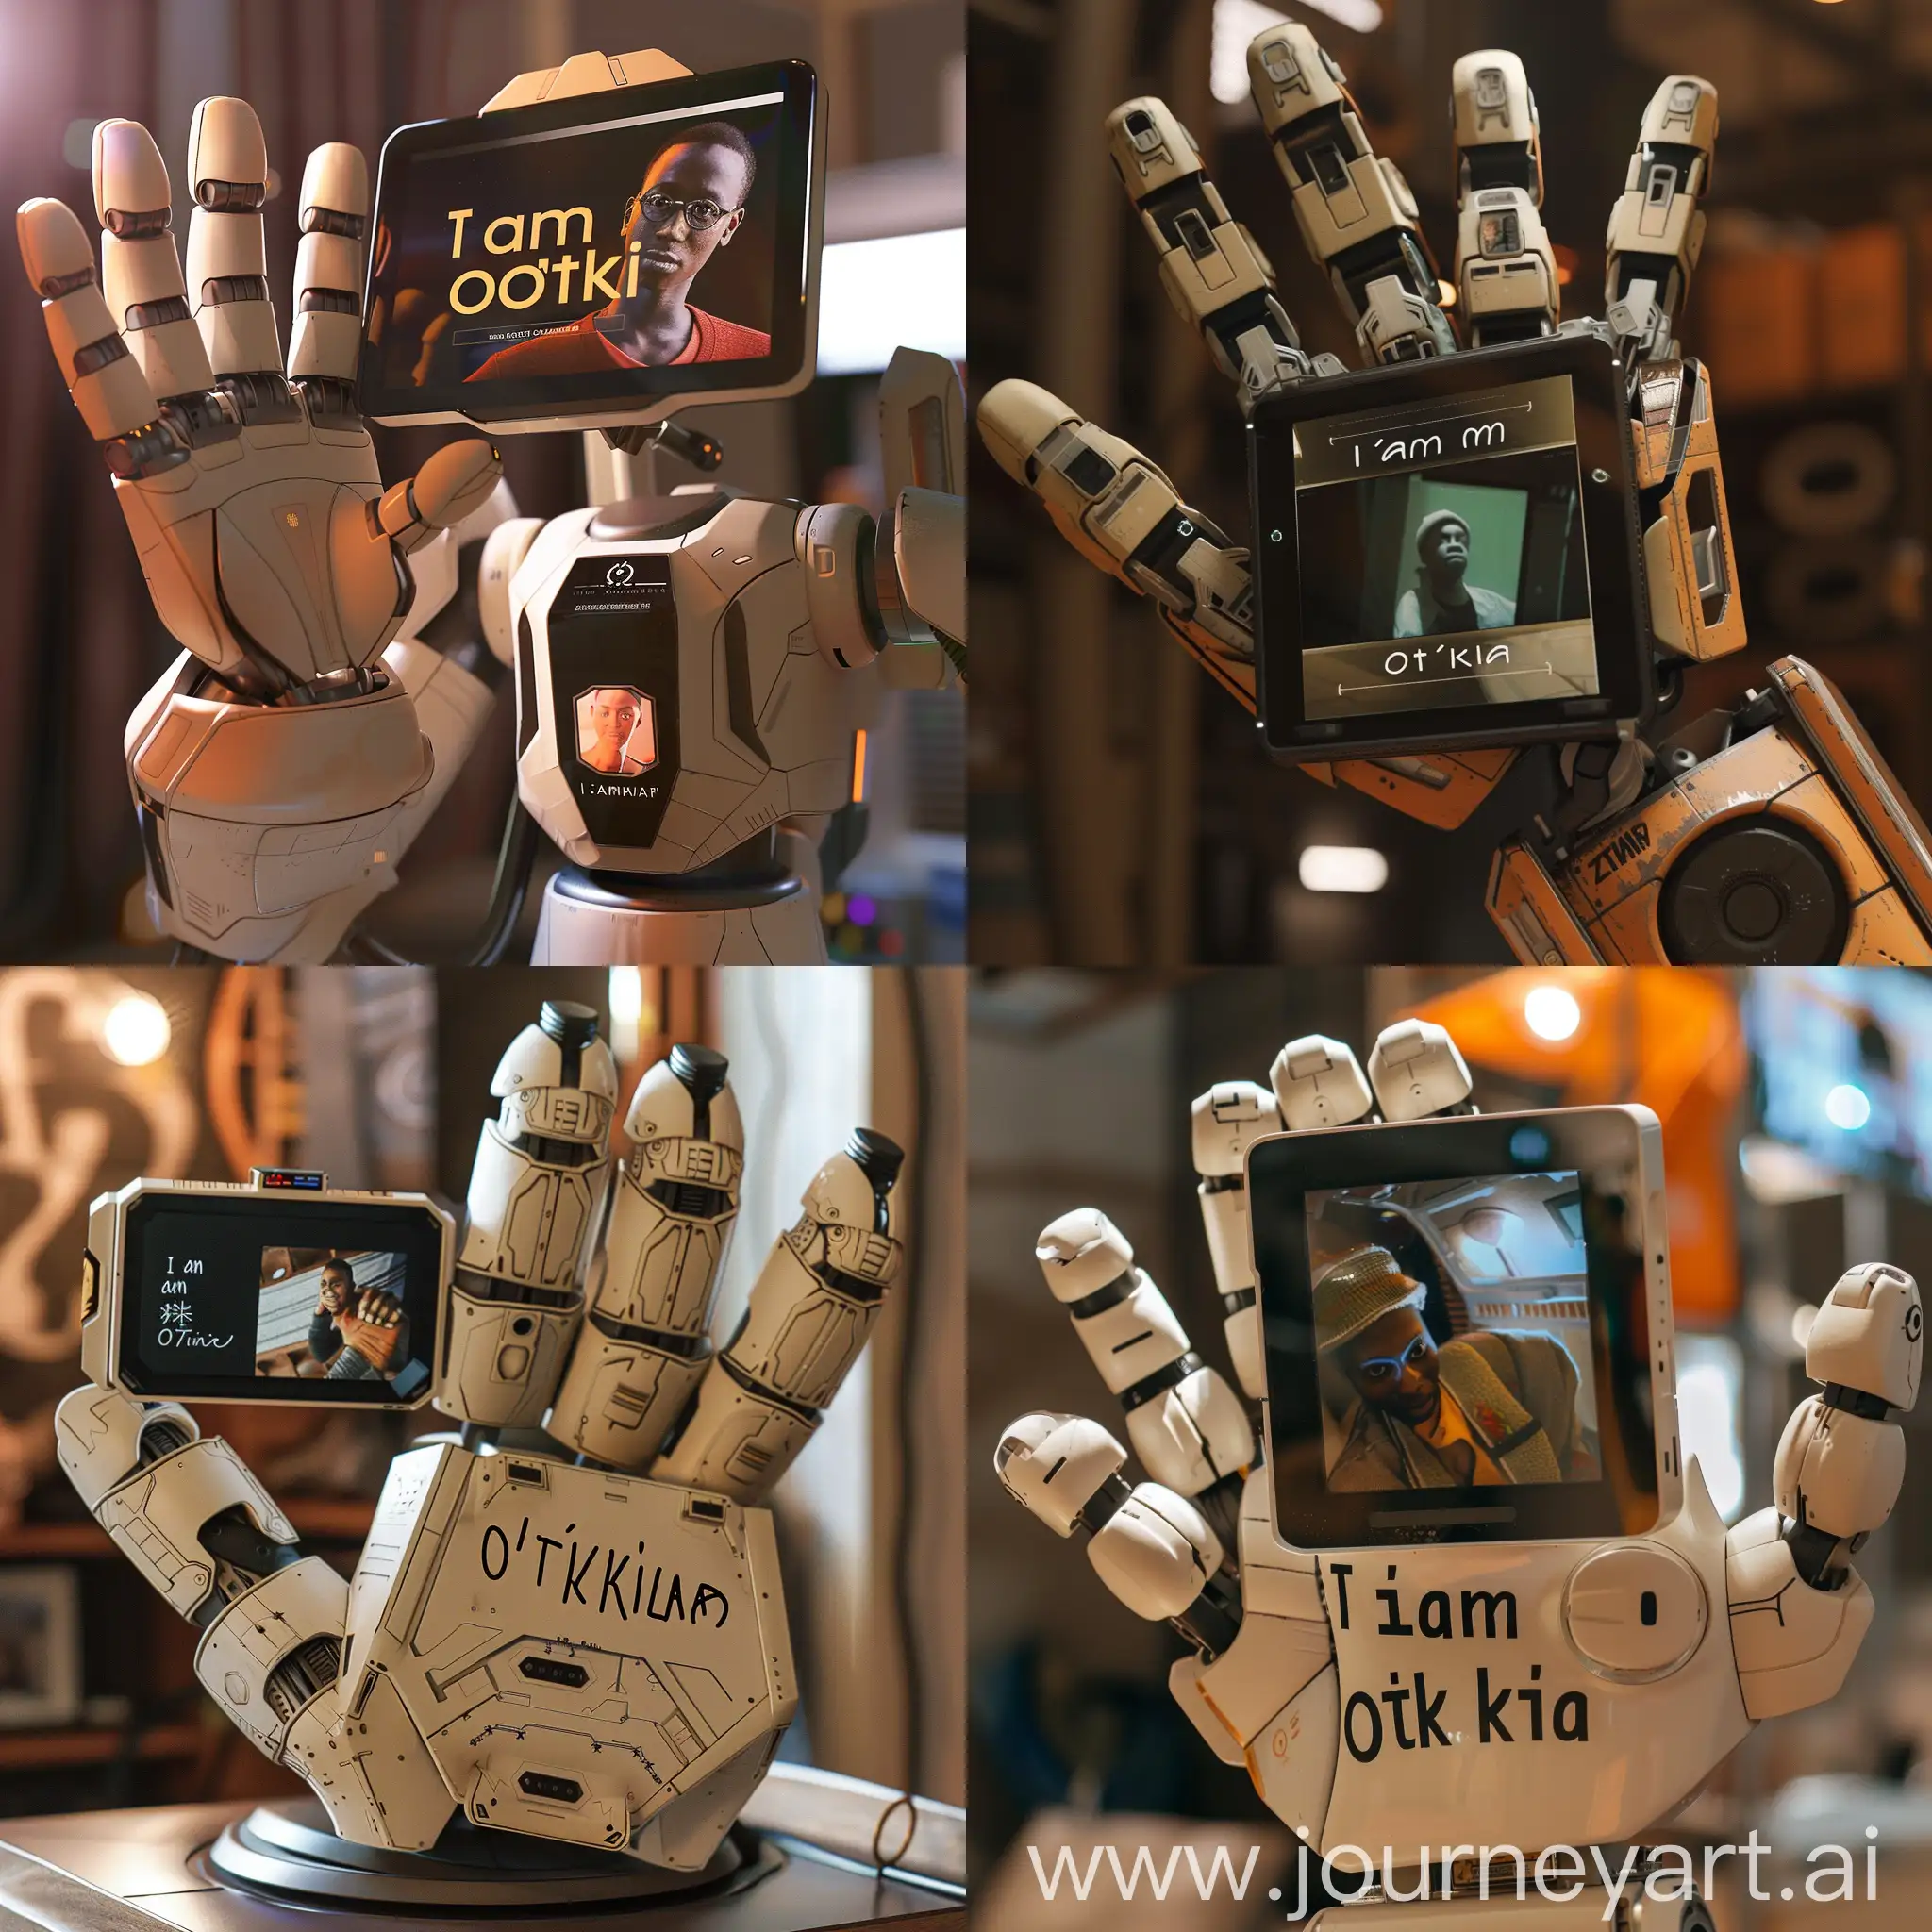 HandShaped-Robot-Displaying-I-am-Otaku-with-Kilwa-Image